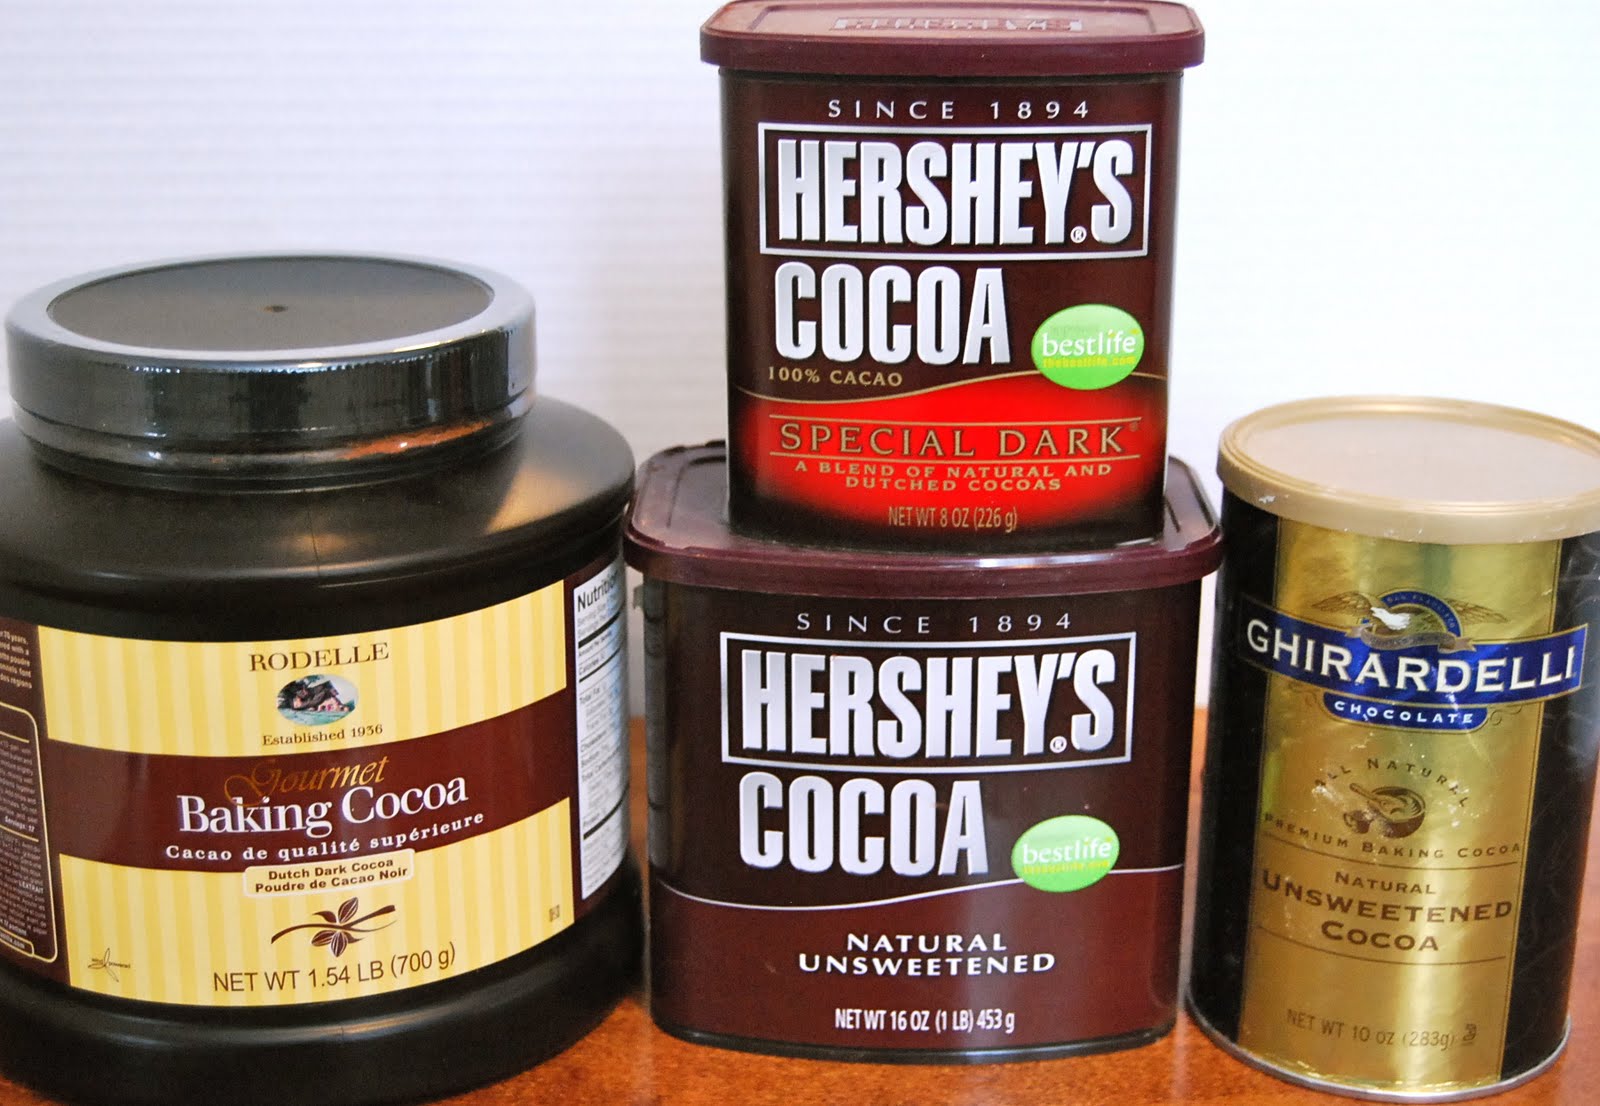 marzipan: A Closer Look at Cocoa Powder